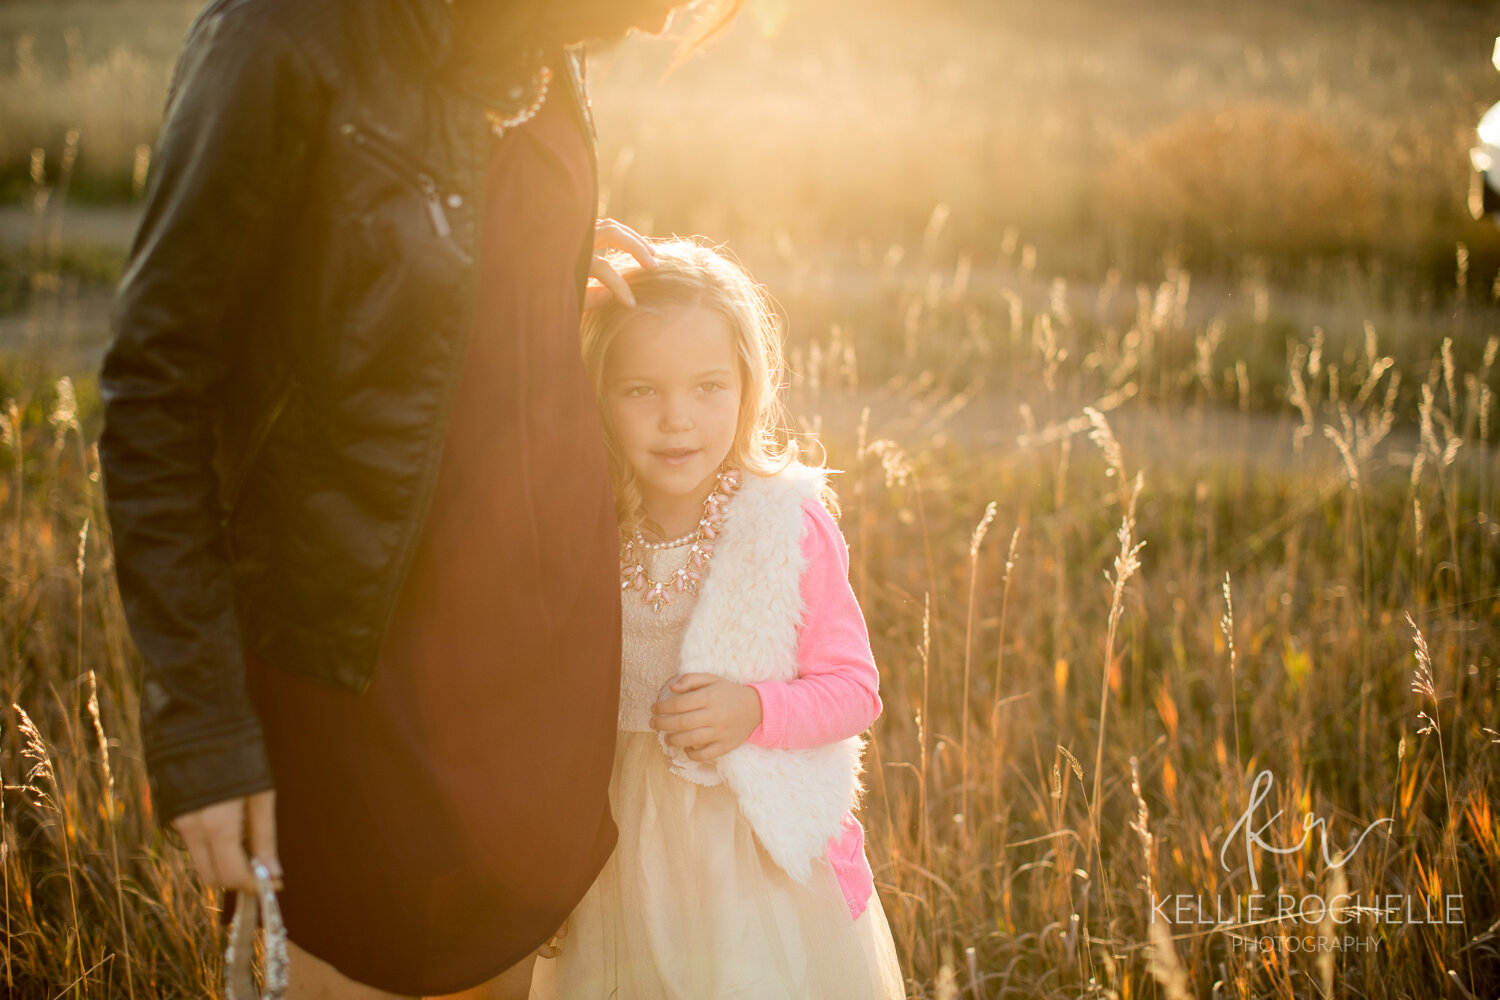 sun haze in a wheat field, young girl